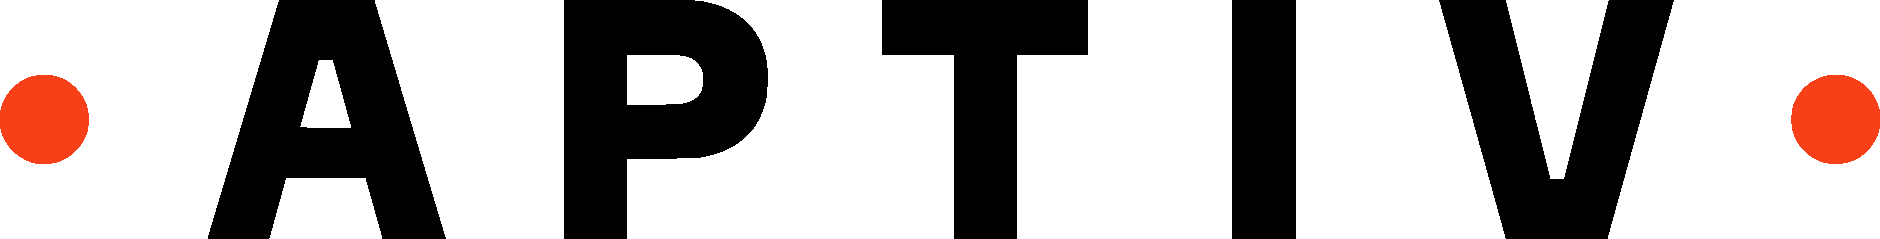 Aptiv Logo png